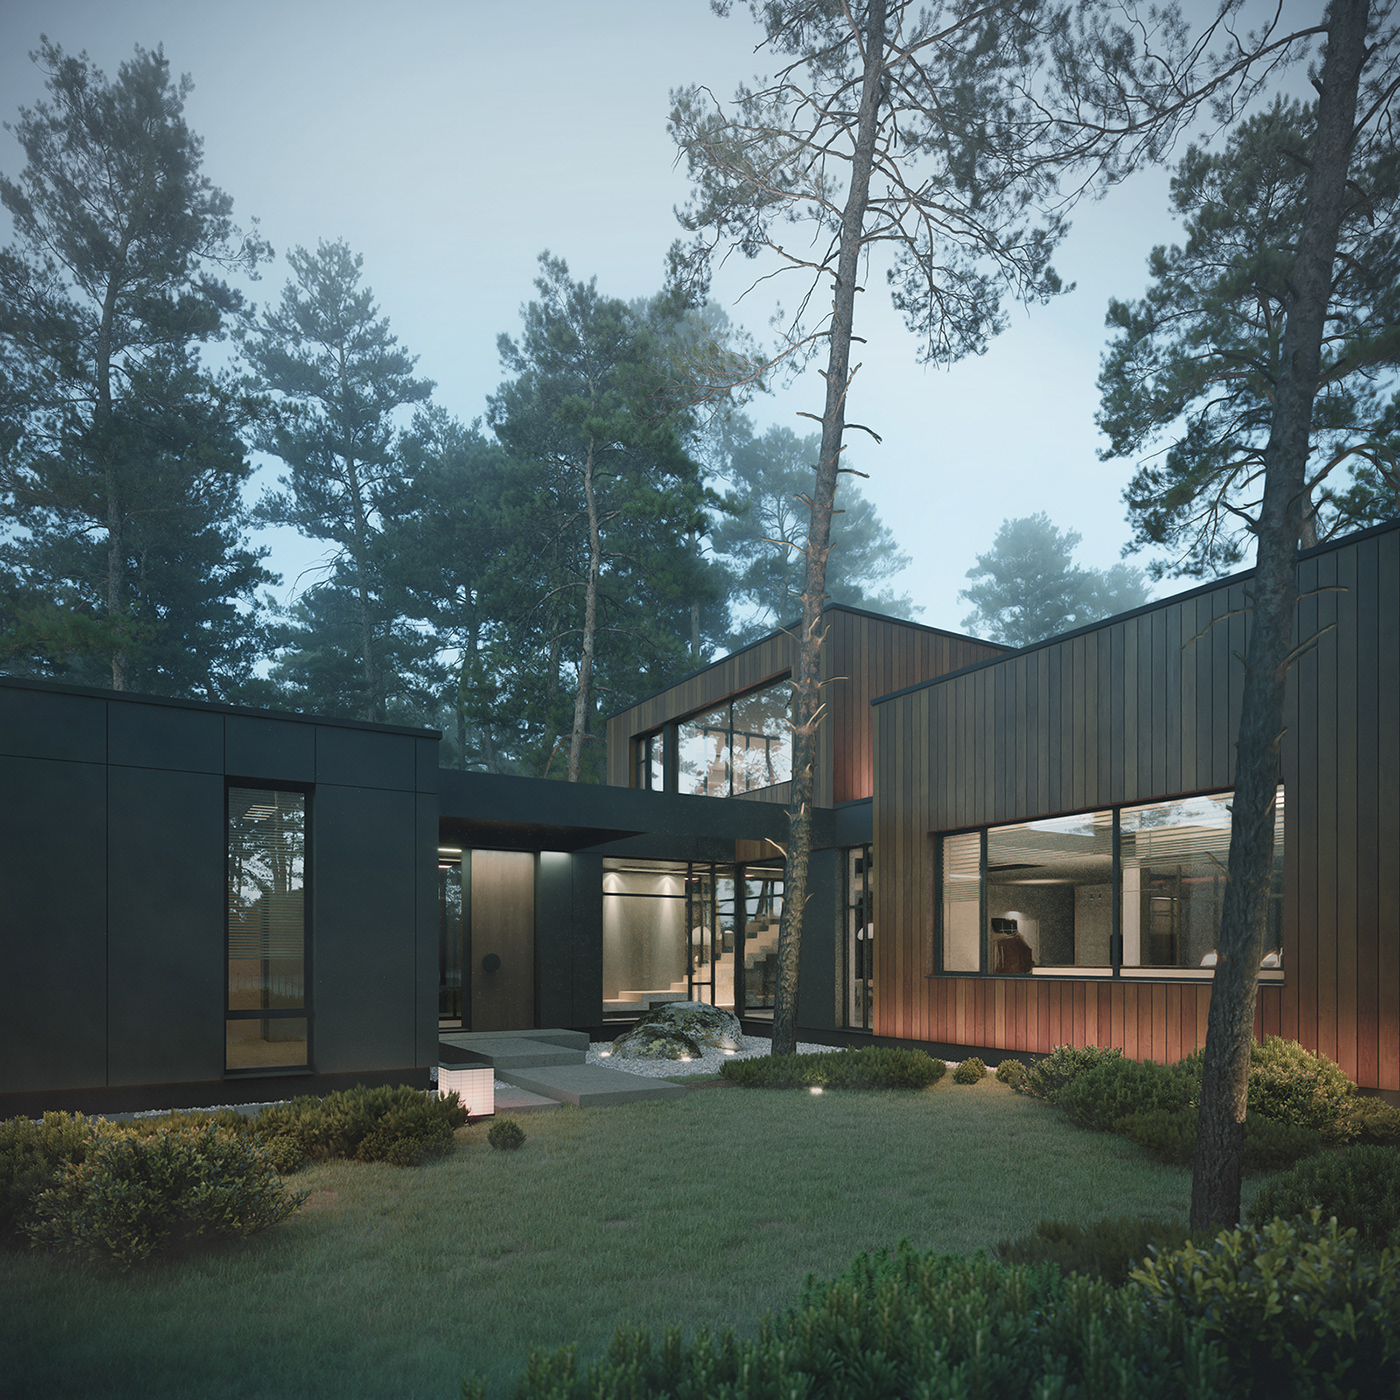 3ds max architecture visualization Render corona archviz exterior CGI 3D house